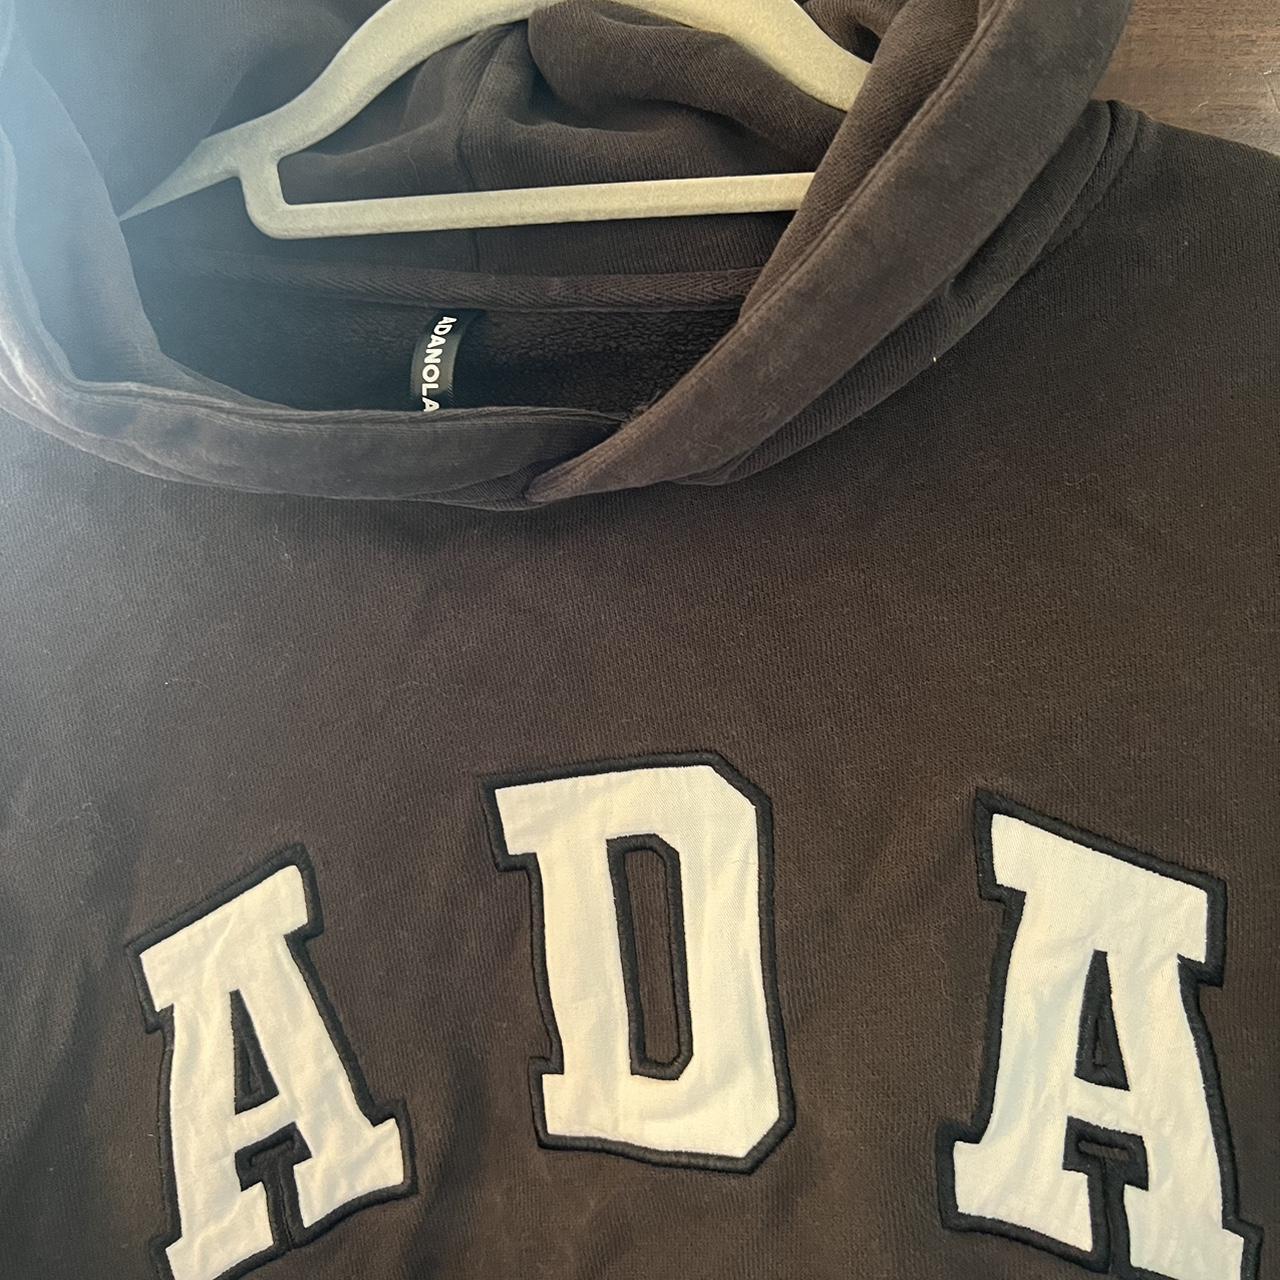 Adanola hoodie (ADA) Sold out online - Depop